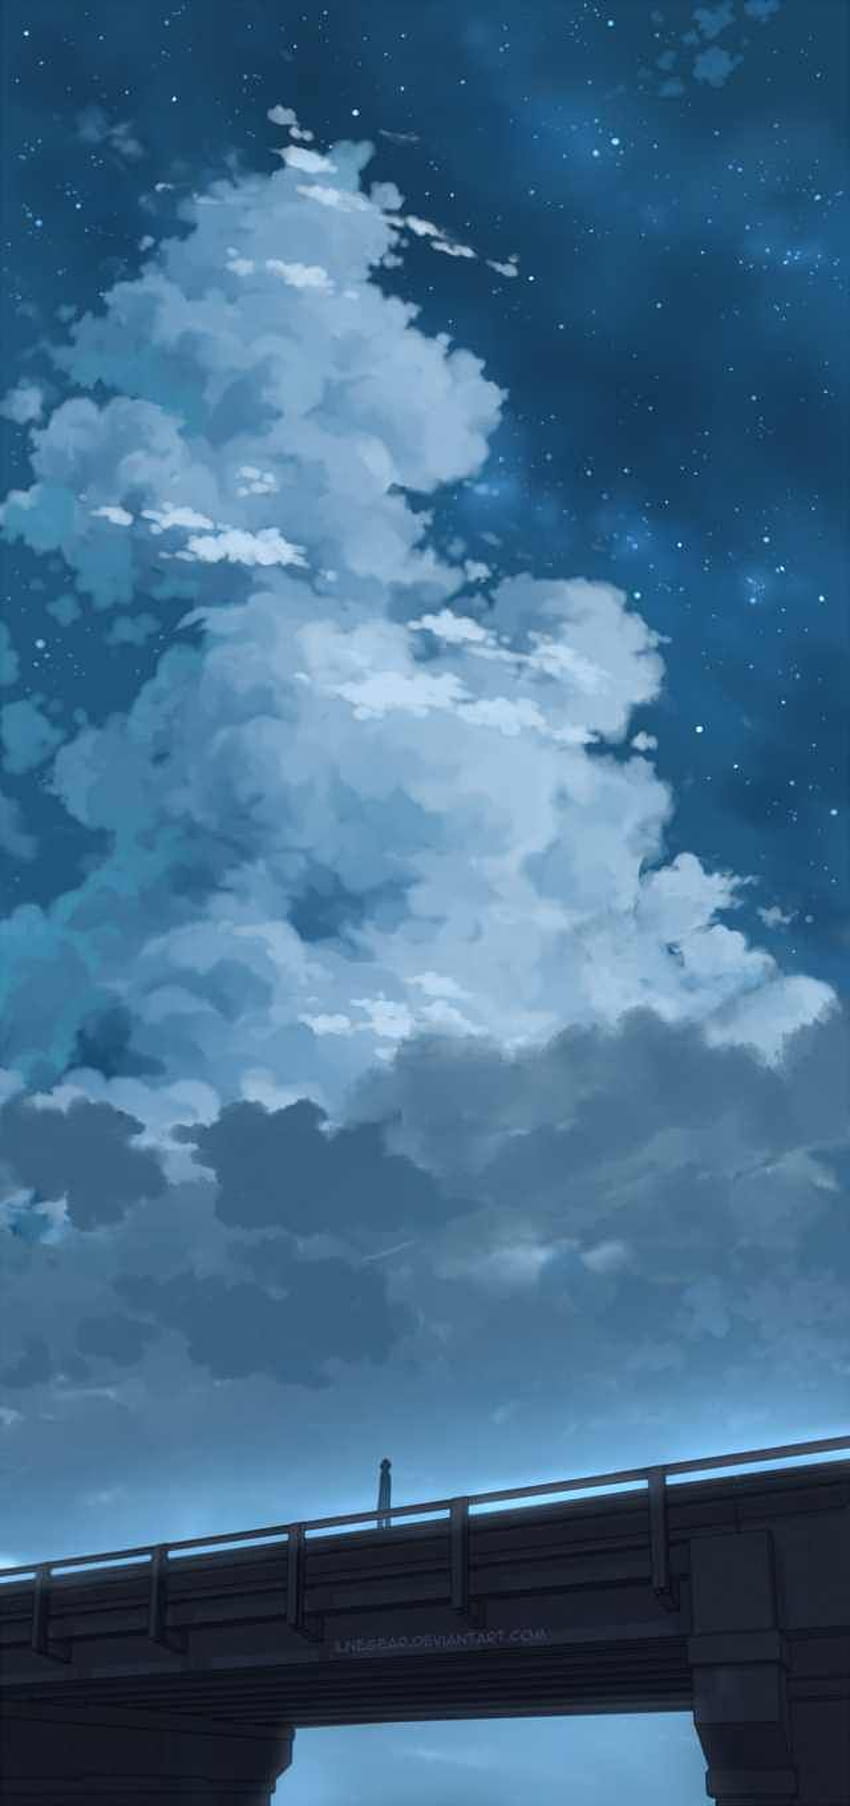 Premium Photo | Anime landscape, the sky, clouds, stars, stars, the moon,  the moon, the moon